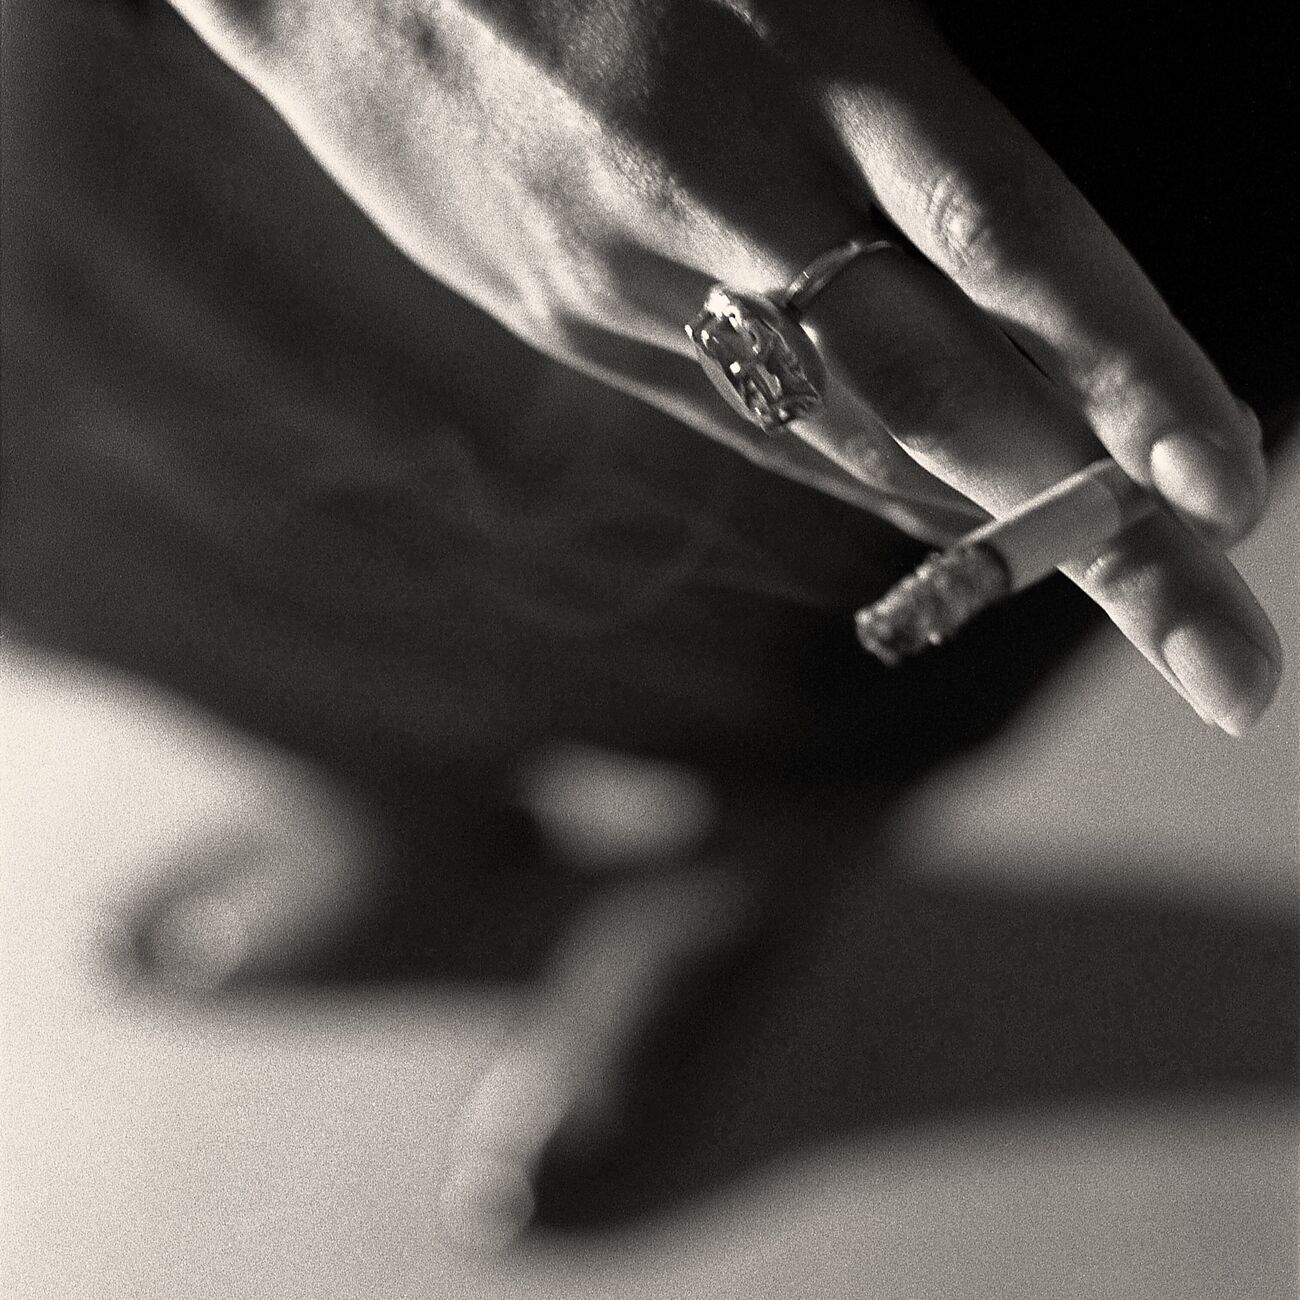 Cigarette, Poitiers, France. April 1991. Ref-823 - Denis Olivier Art Photography